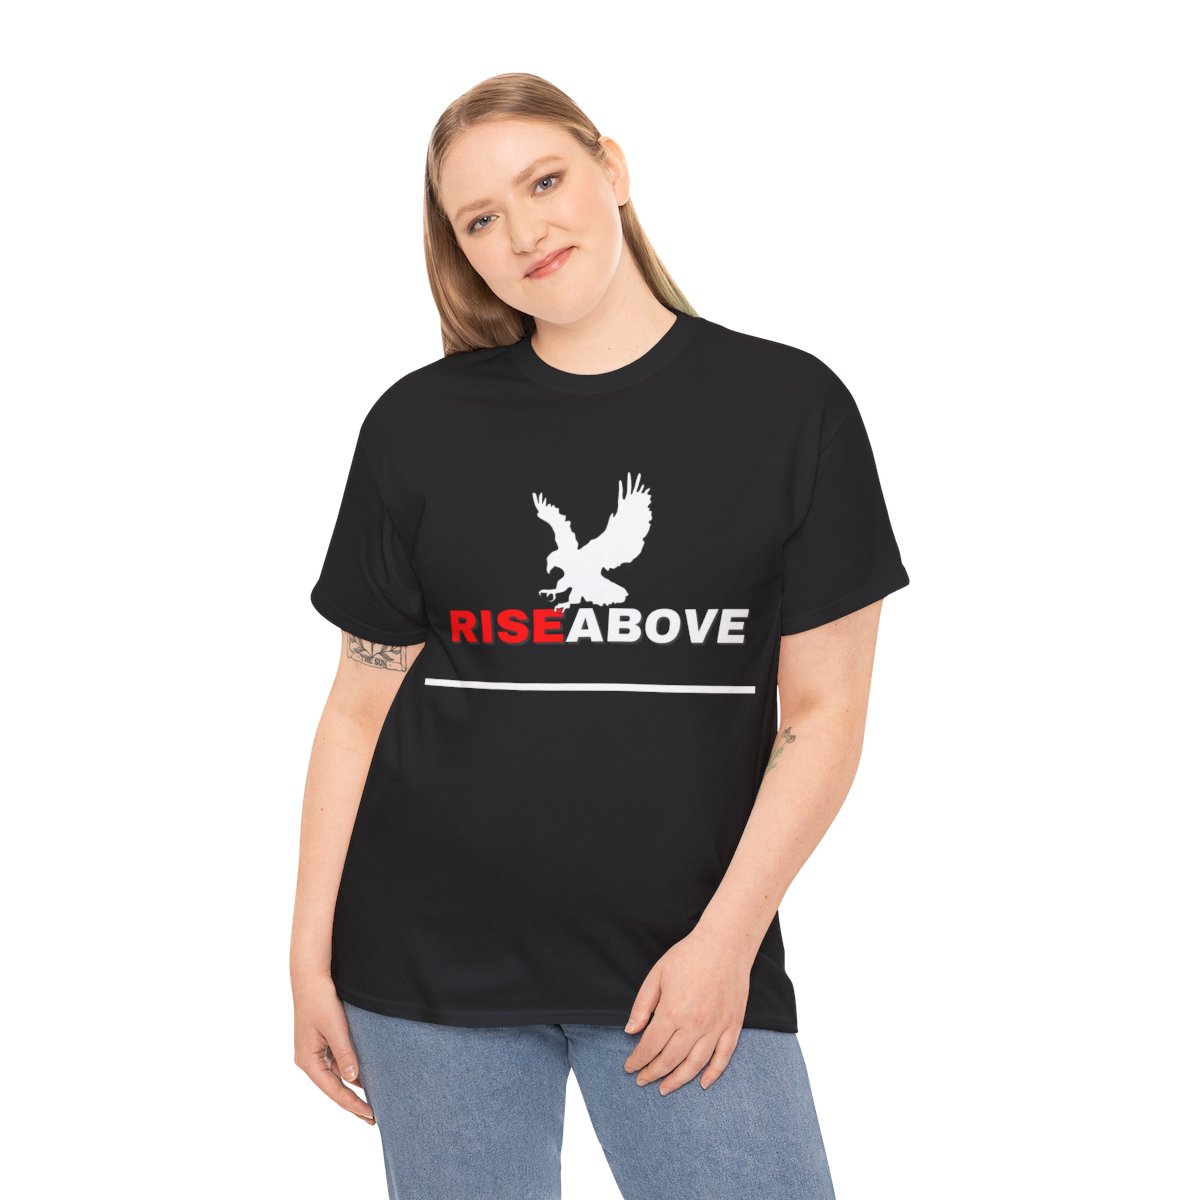 Rise Above T-Shirt product thumbnail image